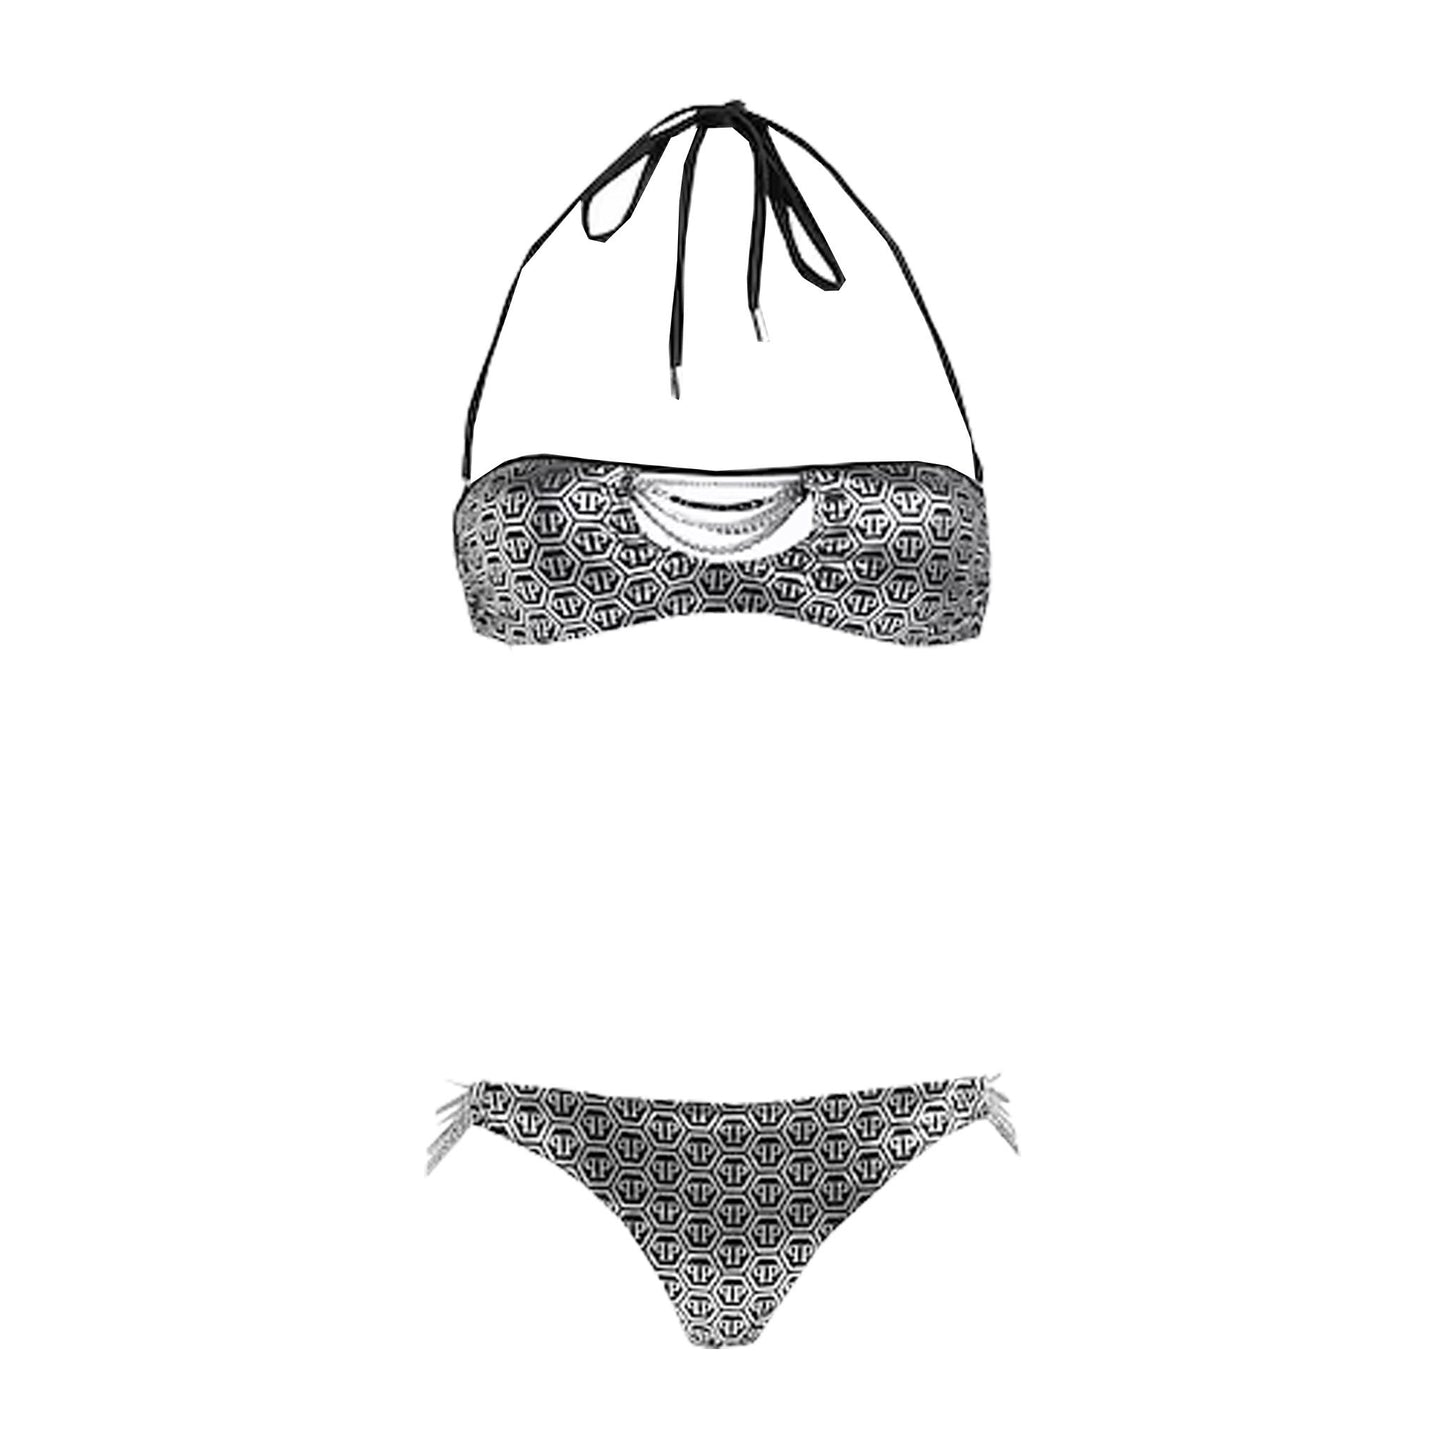 Philipp Plein Chic Grey Lurex Bandeau Bikini with Chain Details